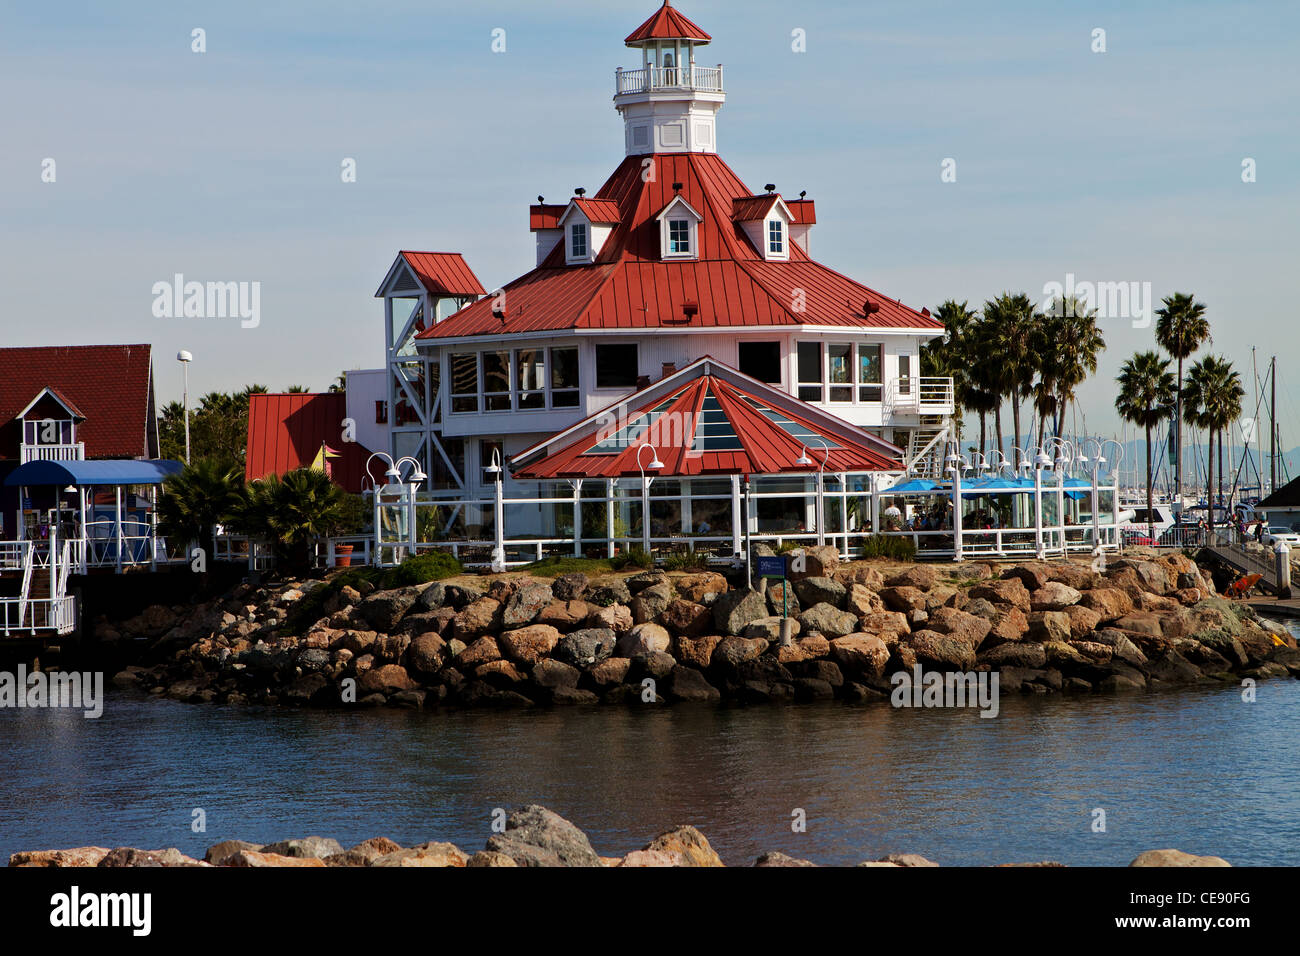 Parkers ristorante Lighthouse villaggio litoraneo Long Beach California Foto Stock